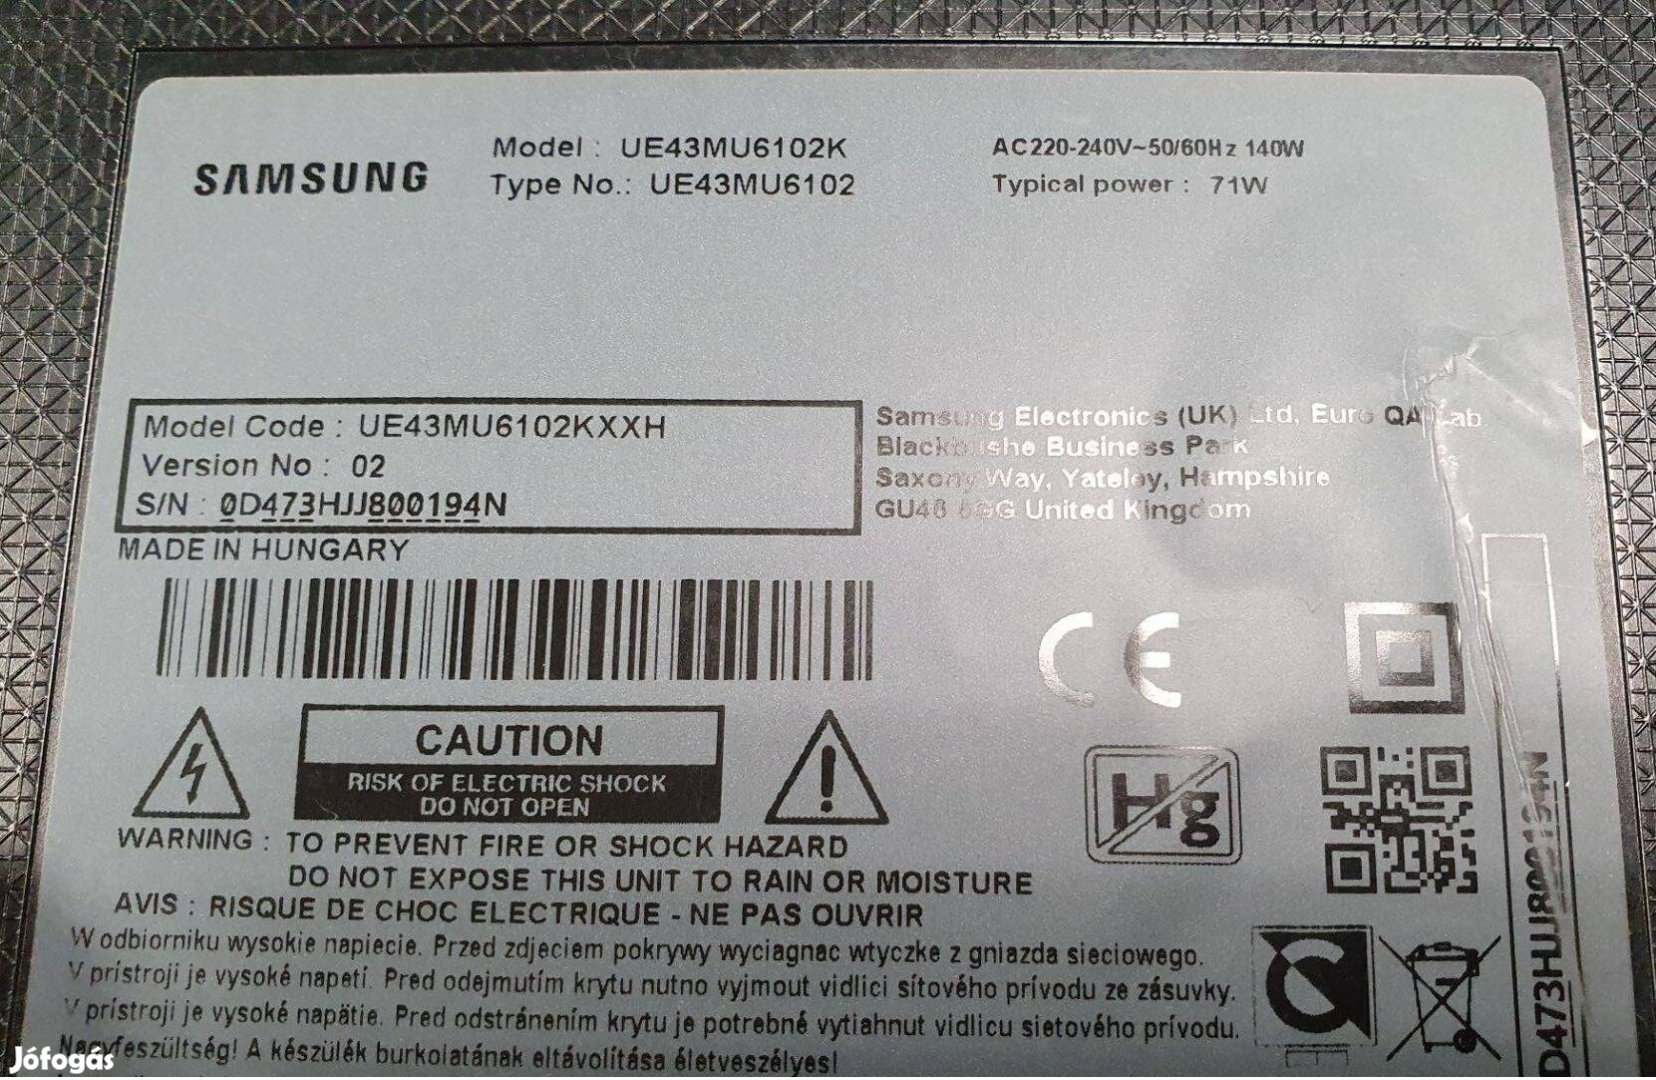 Samsung UE43MU6102 LED LCD hibás törött UE43MU6102K mainboard elkelt!